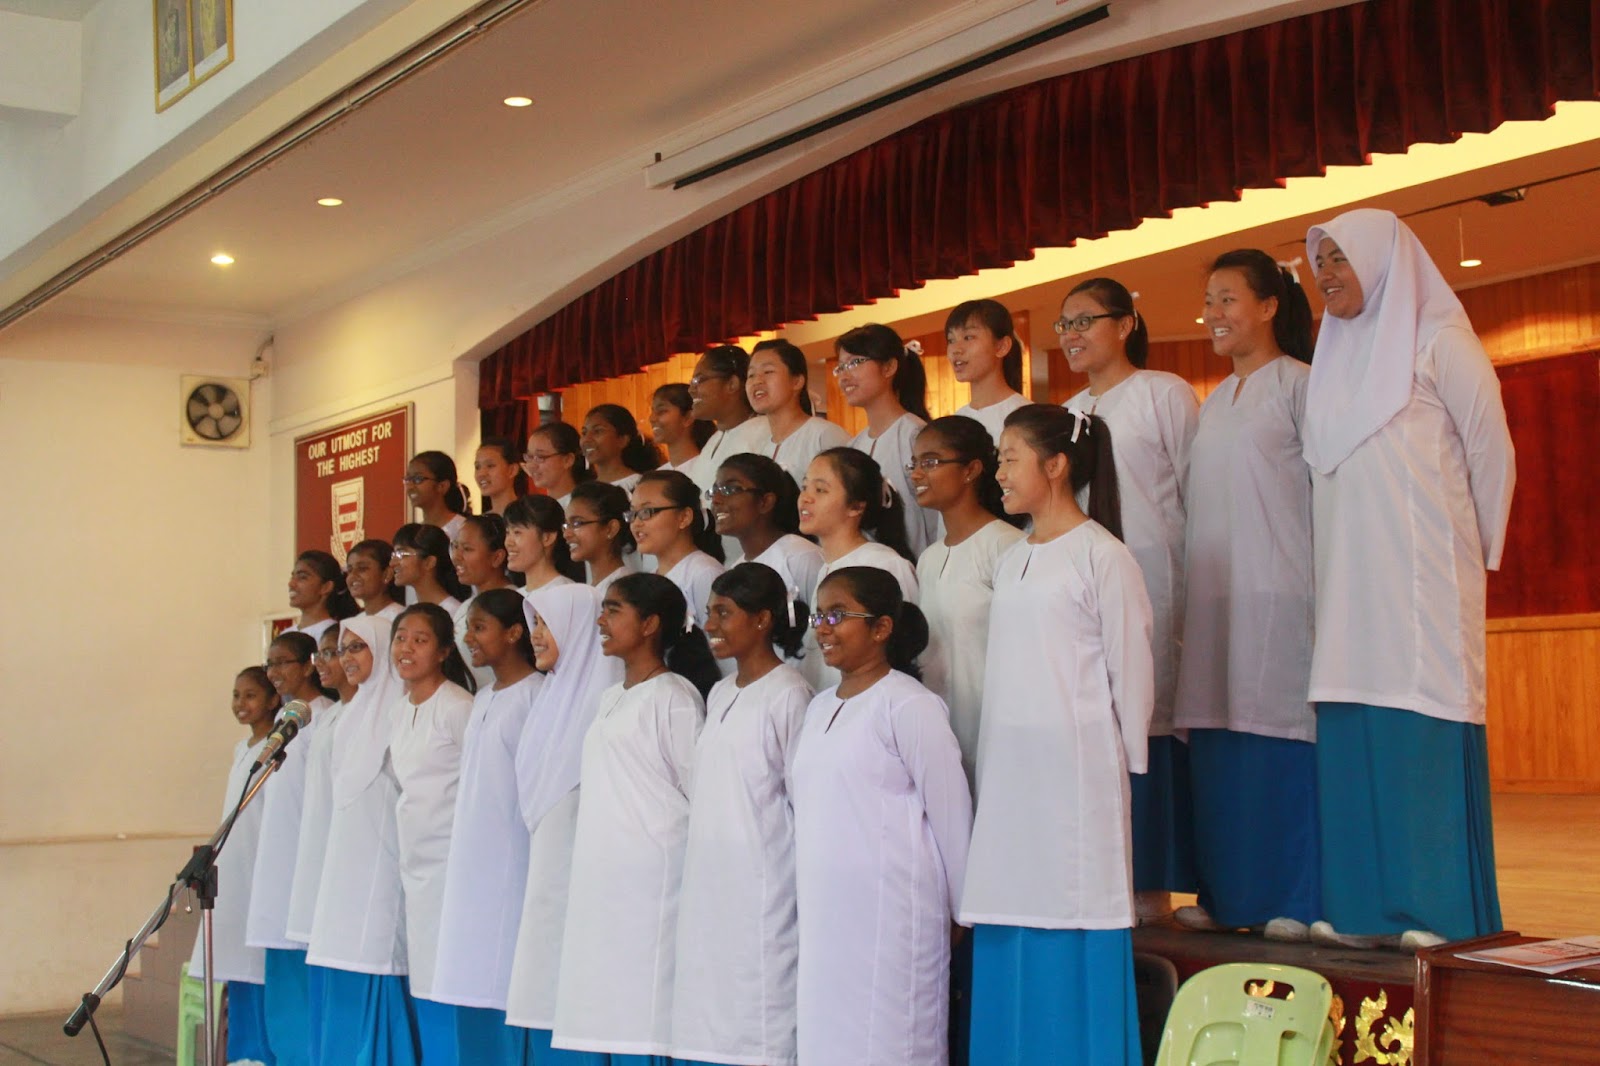 Our Argosy. SMK Methodist Girls, Ipoh, Perak: CHORAL SPEAKING 2014